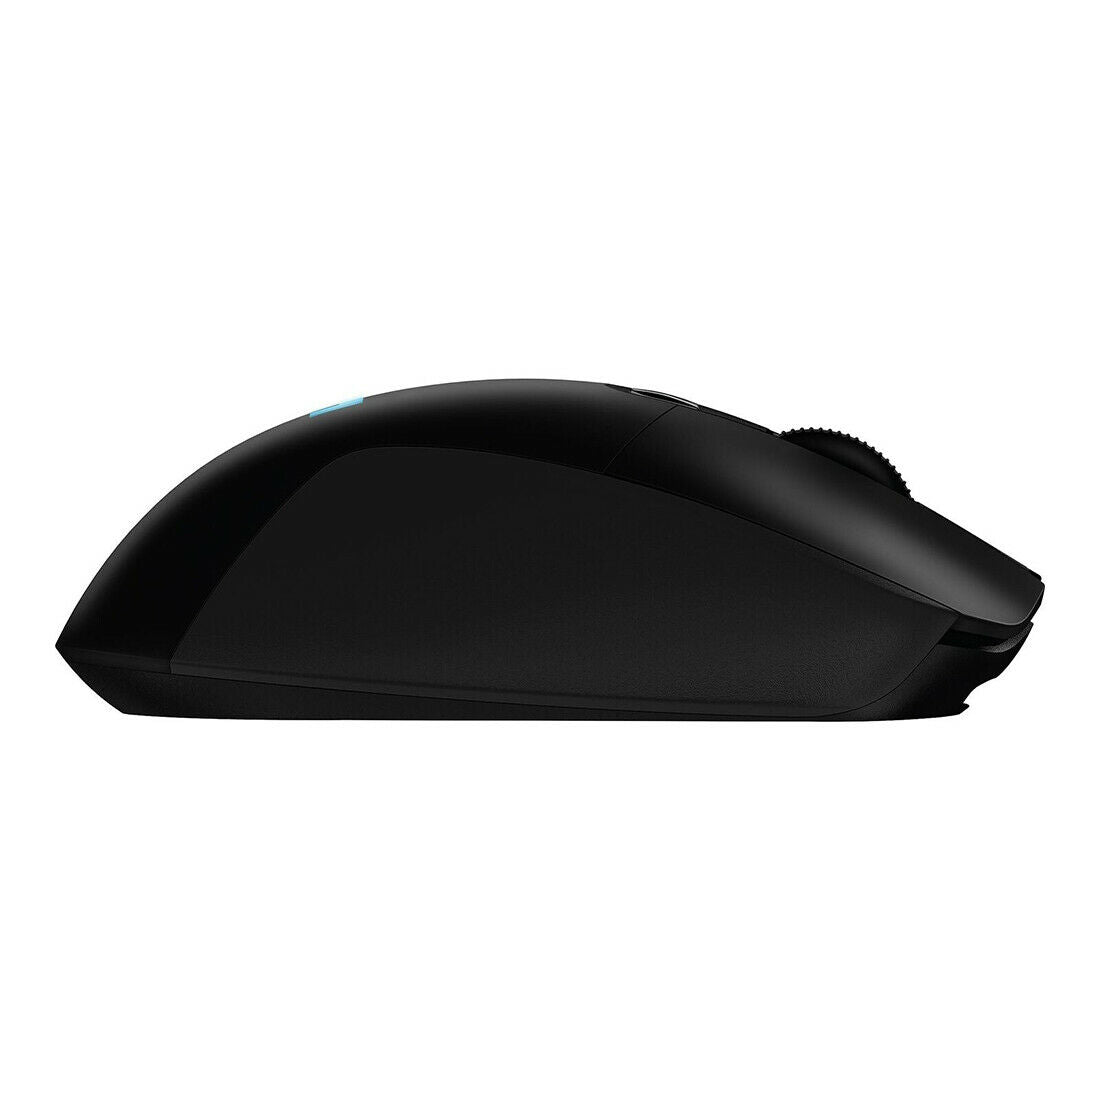 Logitech G703 HERO Lightspeed RGB Wireless Optical Gaming Mouse 910-005638 Black